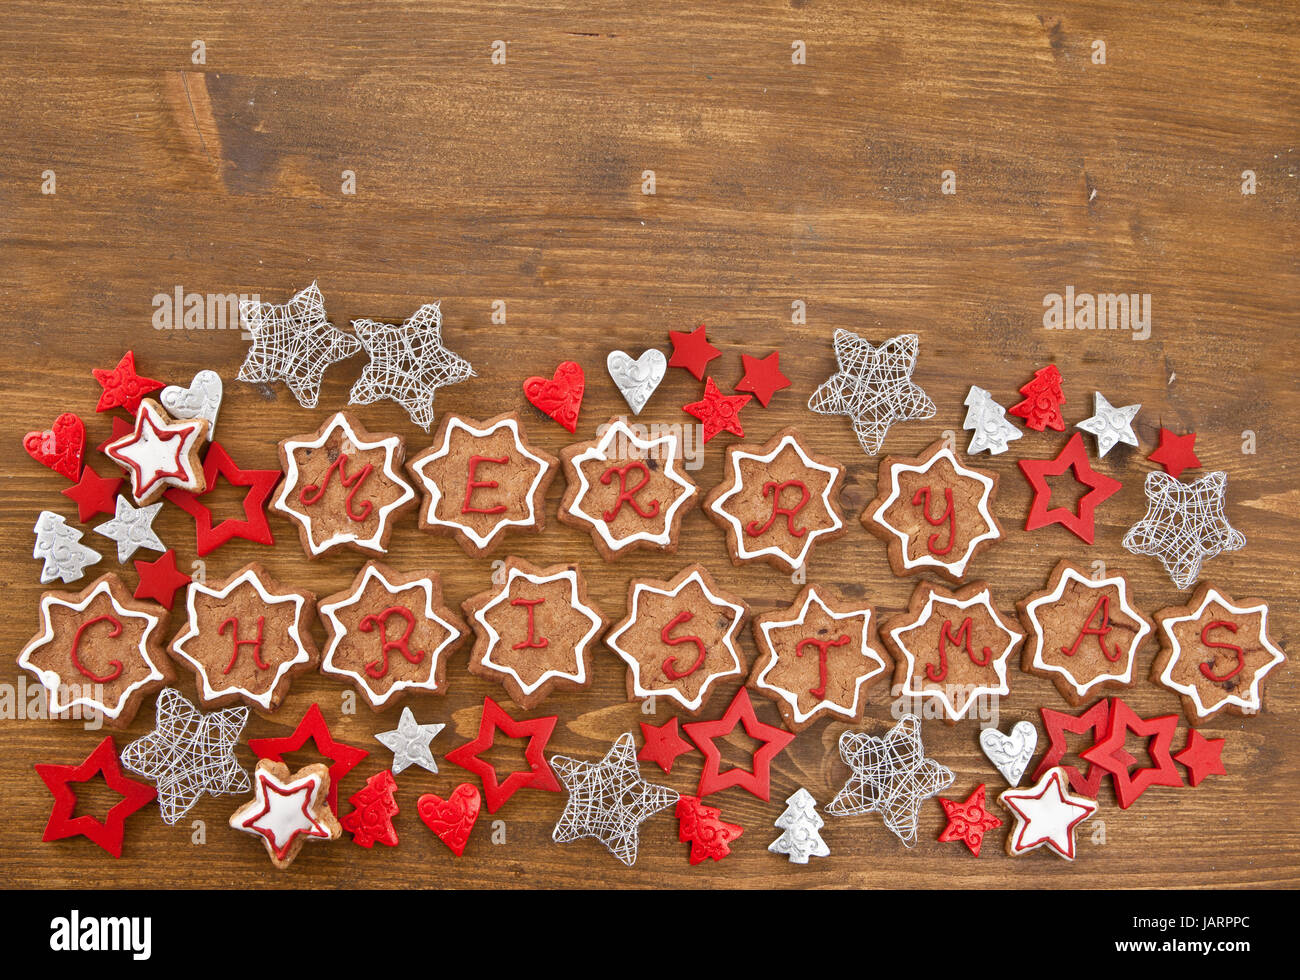 'Merry Christmas' mit Zuckerguss auf Plaetzchen geschrieben Stock Photo